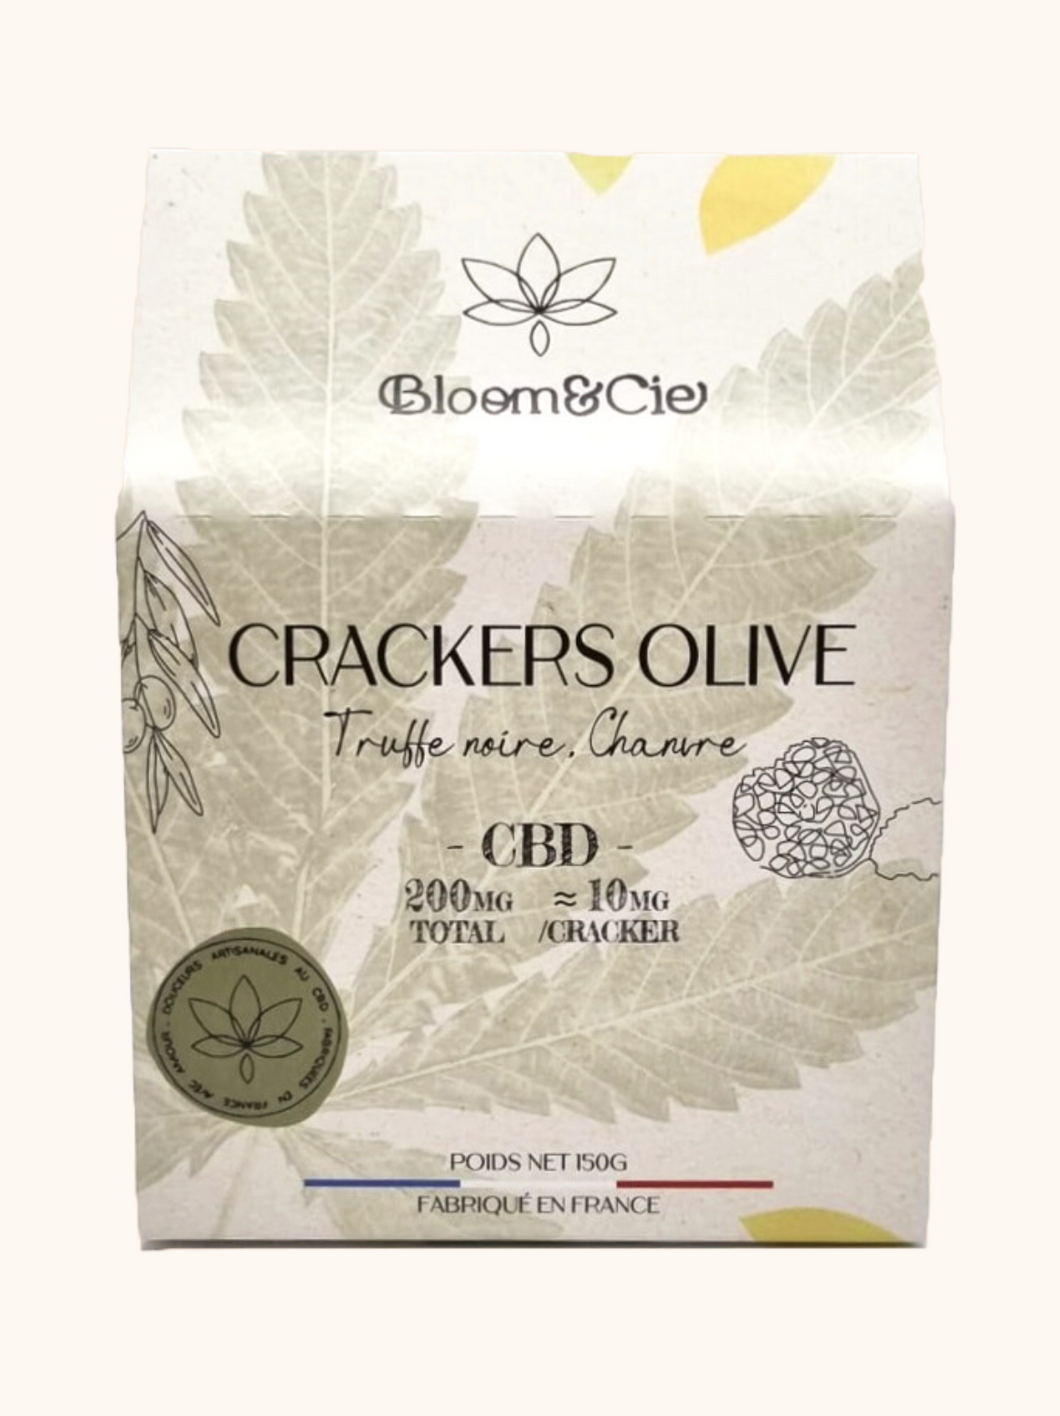 Crackers Olive, Truffe, Chanvre & CBD